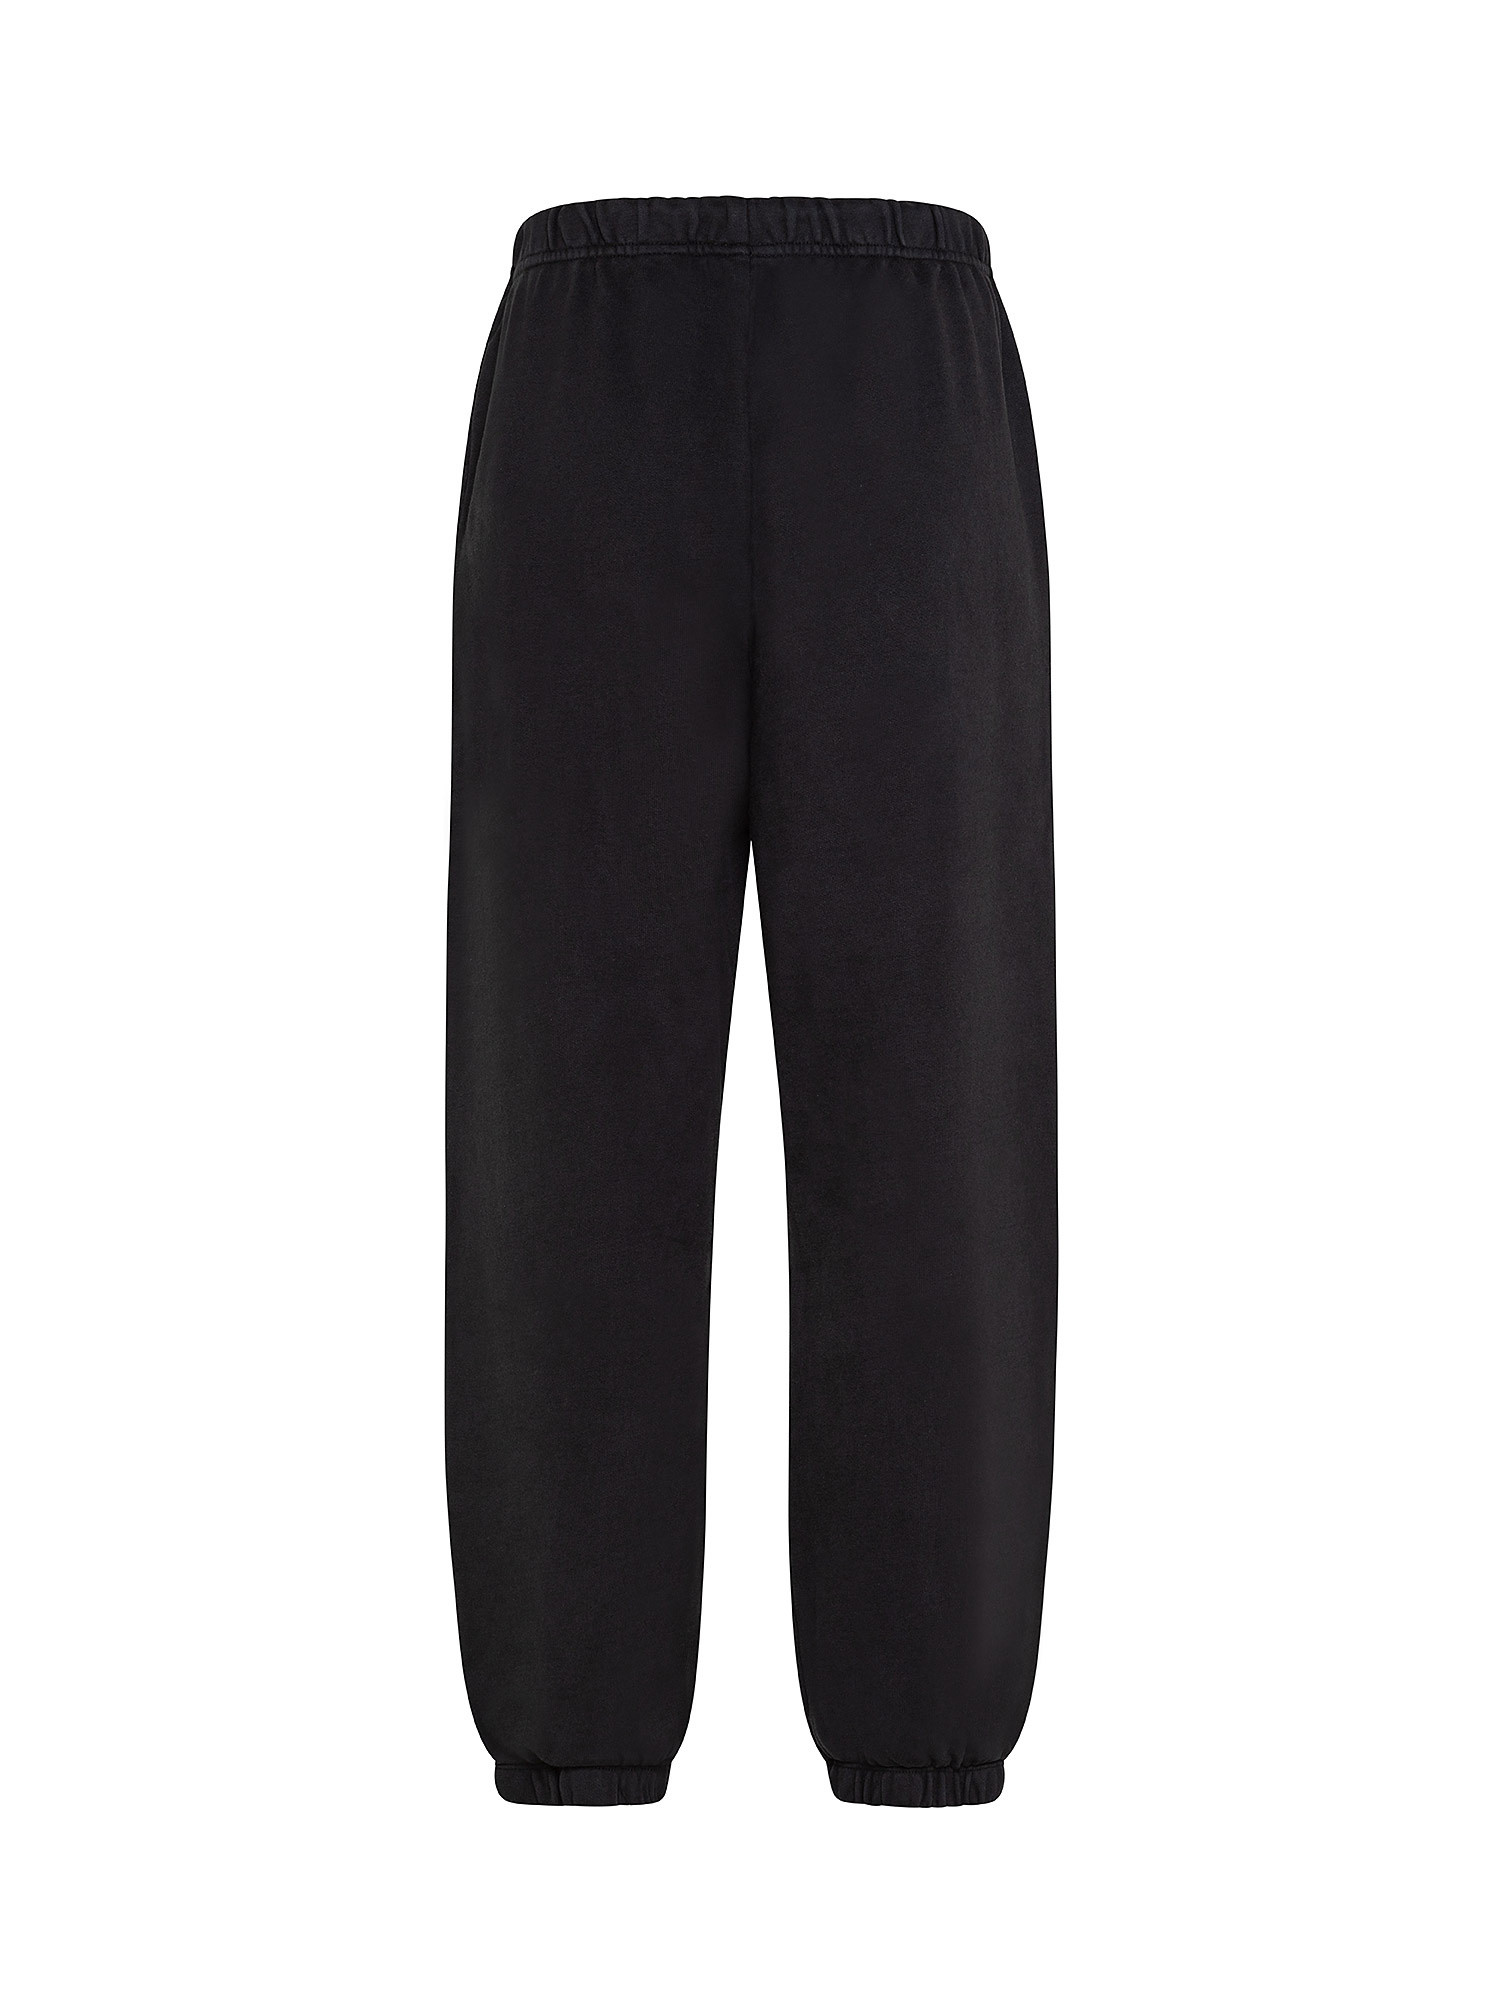 Pantaloni tuta WFH Loungewear, Nero, large image number 1